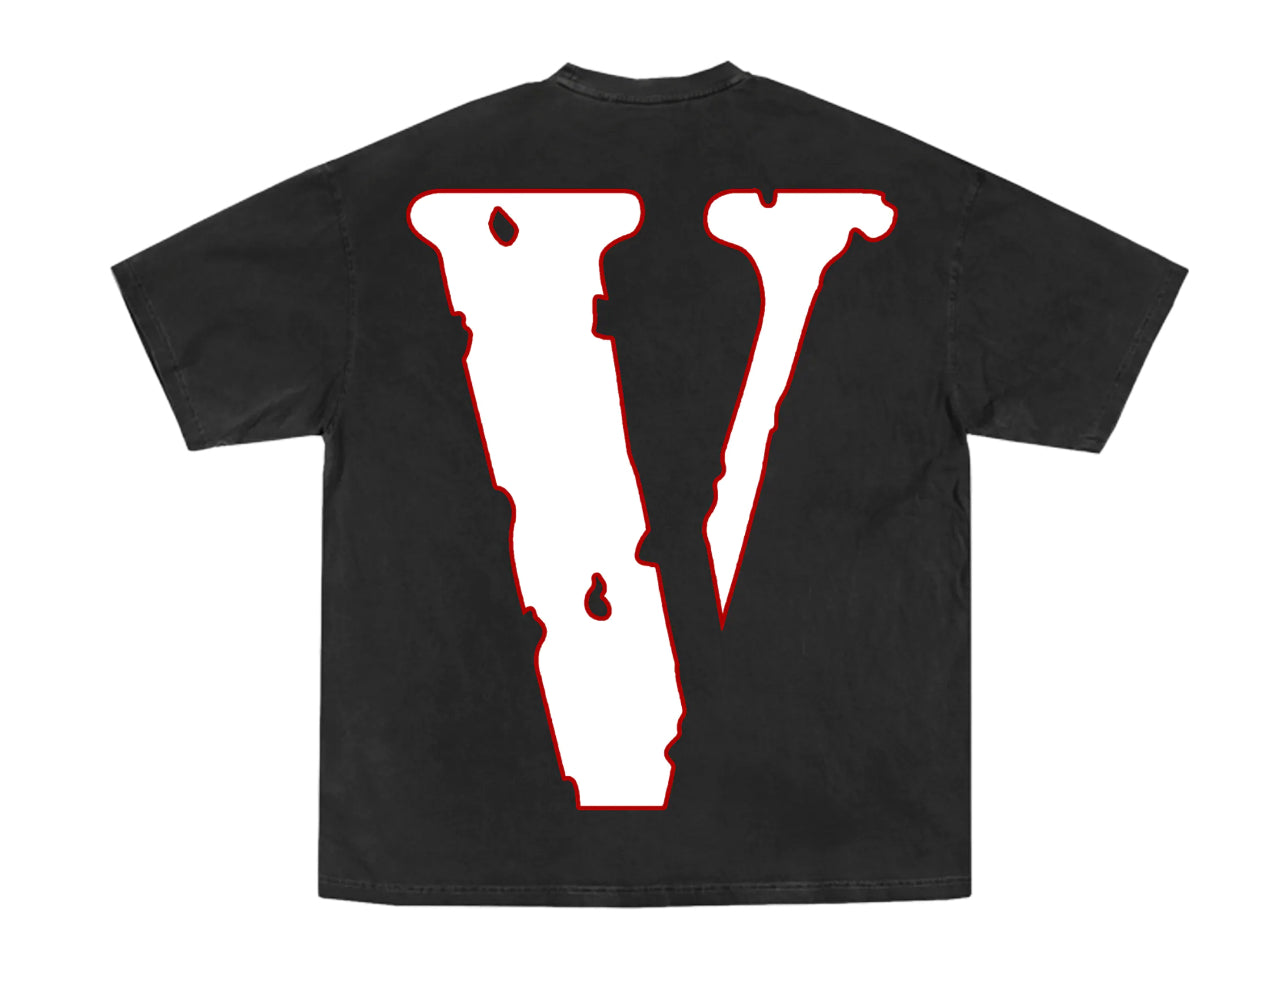 YoungBoy NBA x Vlone Murder Business Tee Black